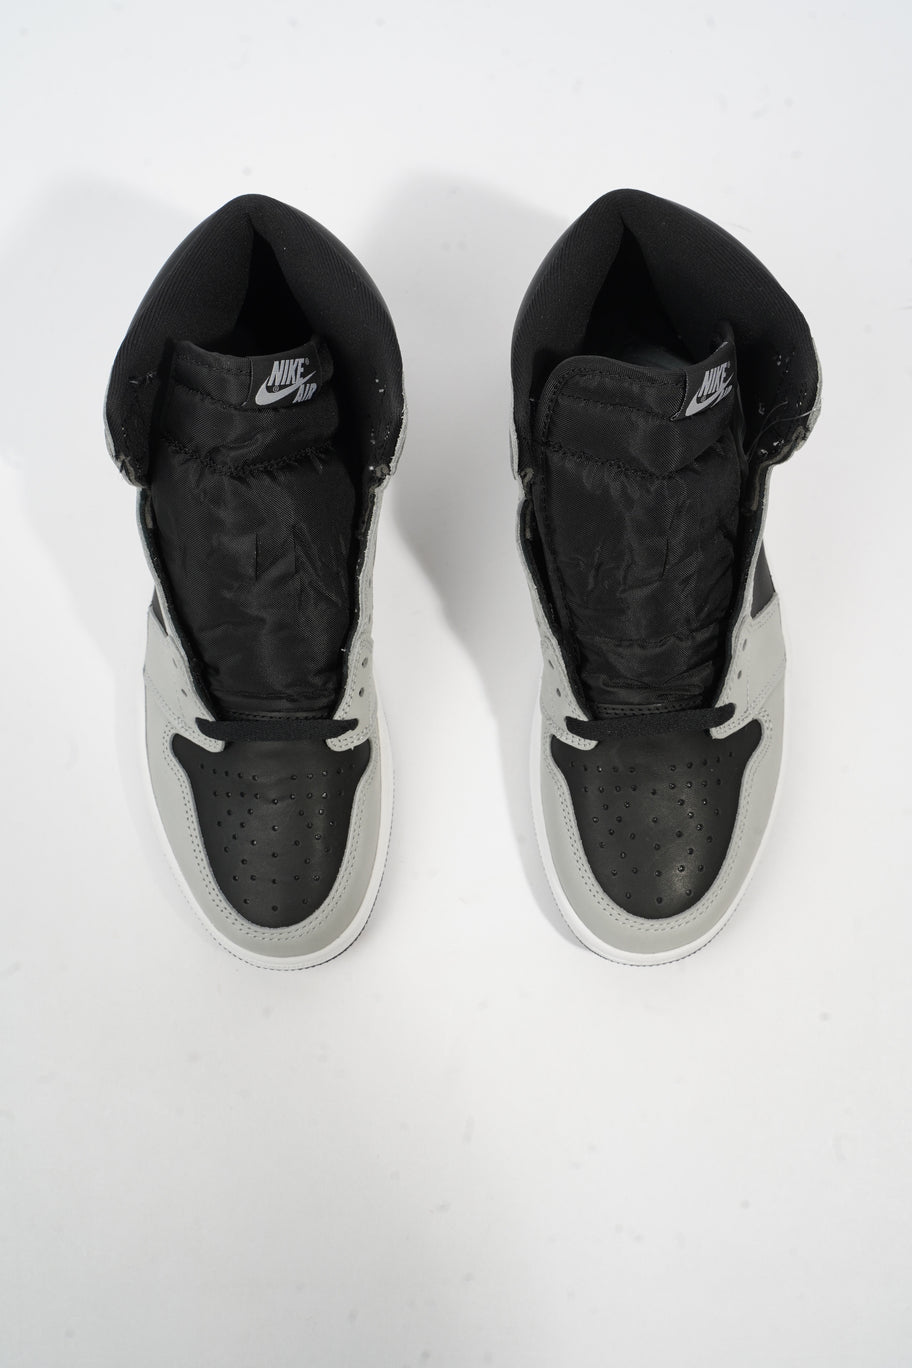 Jordan 1 Retro Hi Shadow 2.0 Black / Smoke Grey / White Leather EU 42.5 UK 8 Image 8